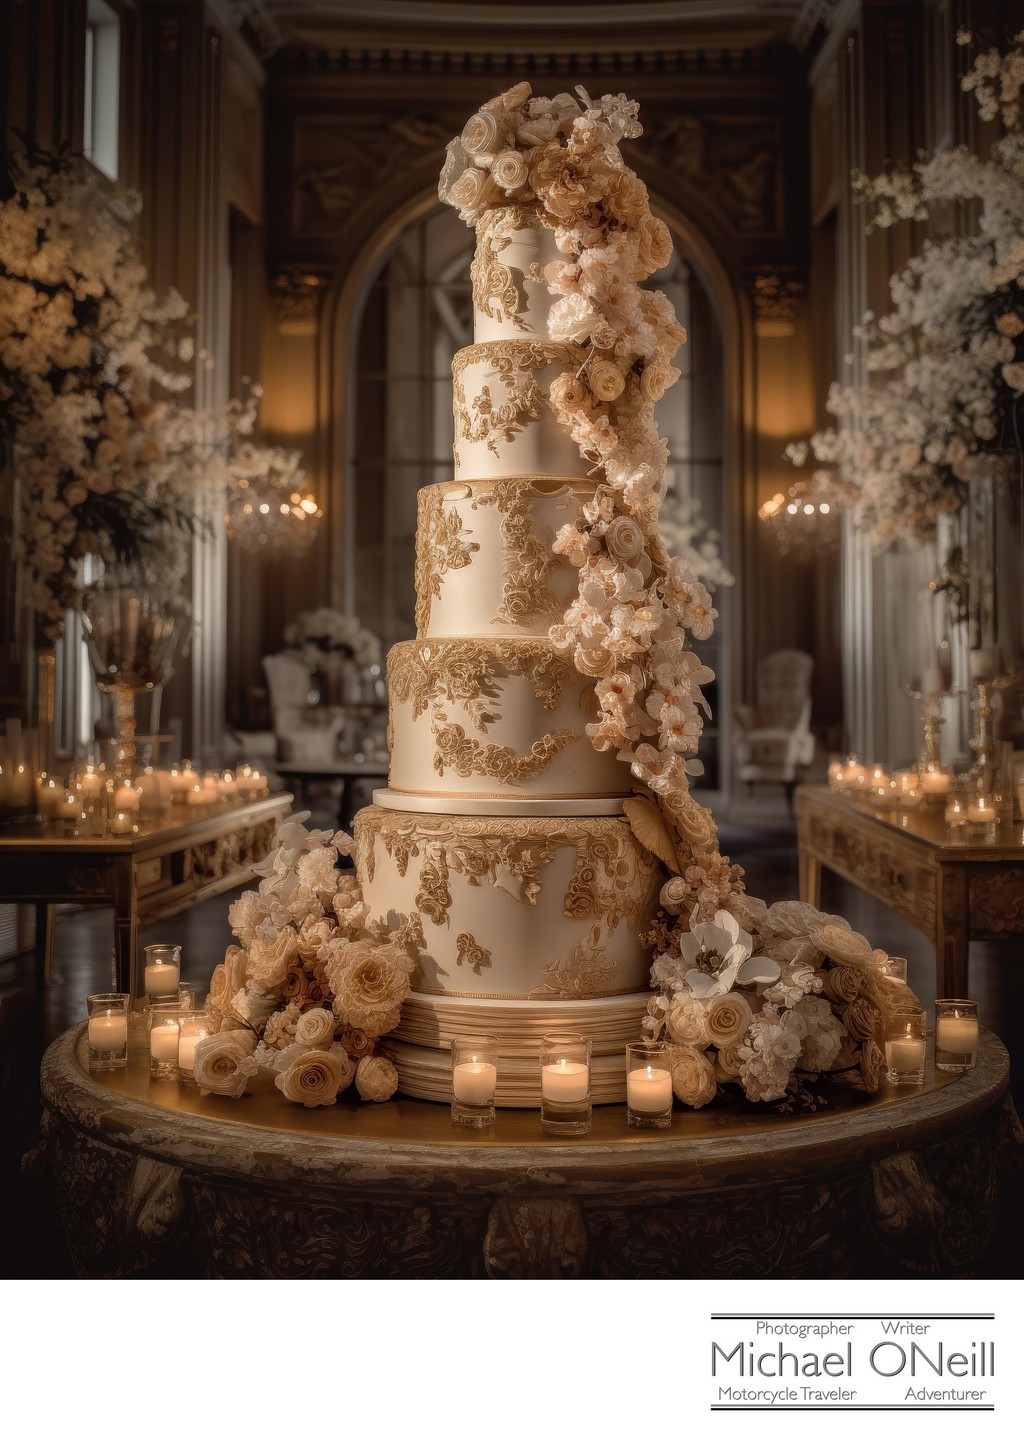 Incredible Wedding Cake Creation On Display In An Elegant Venue